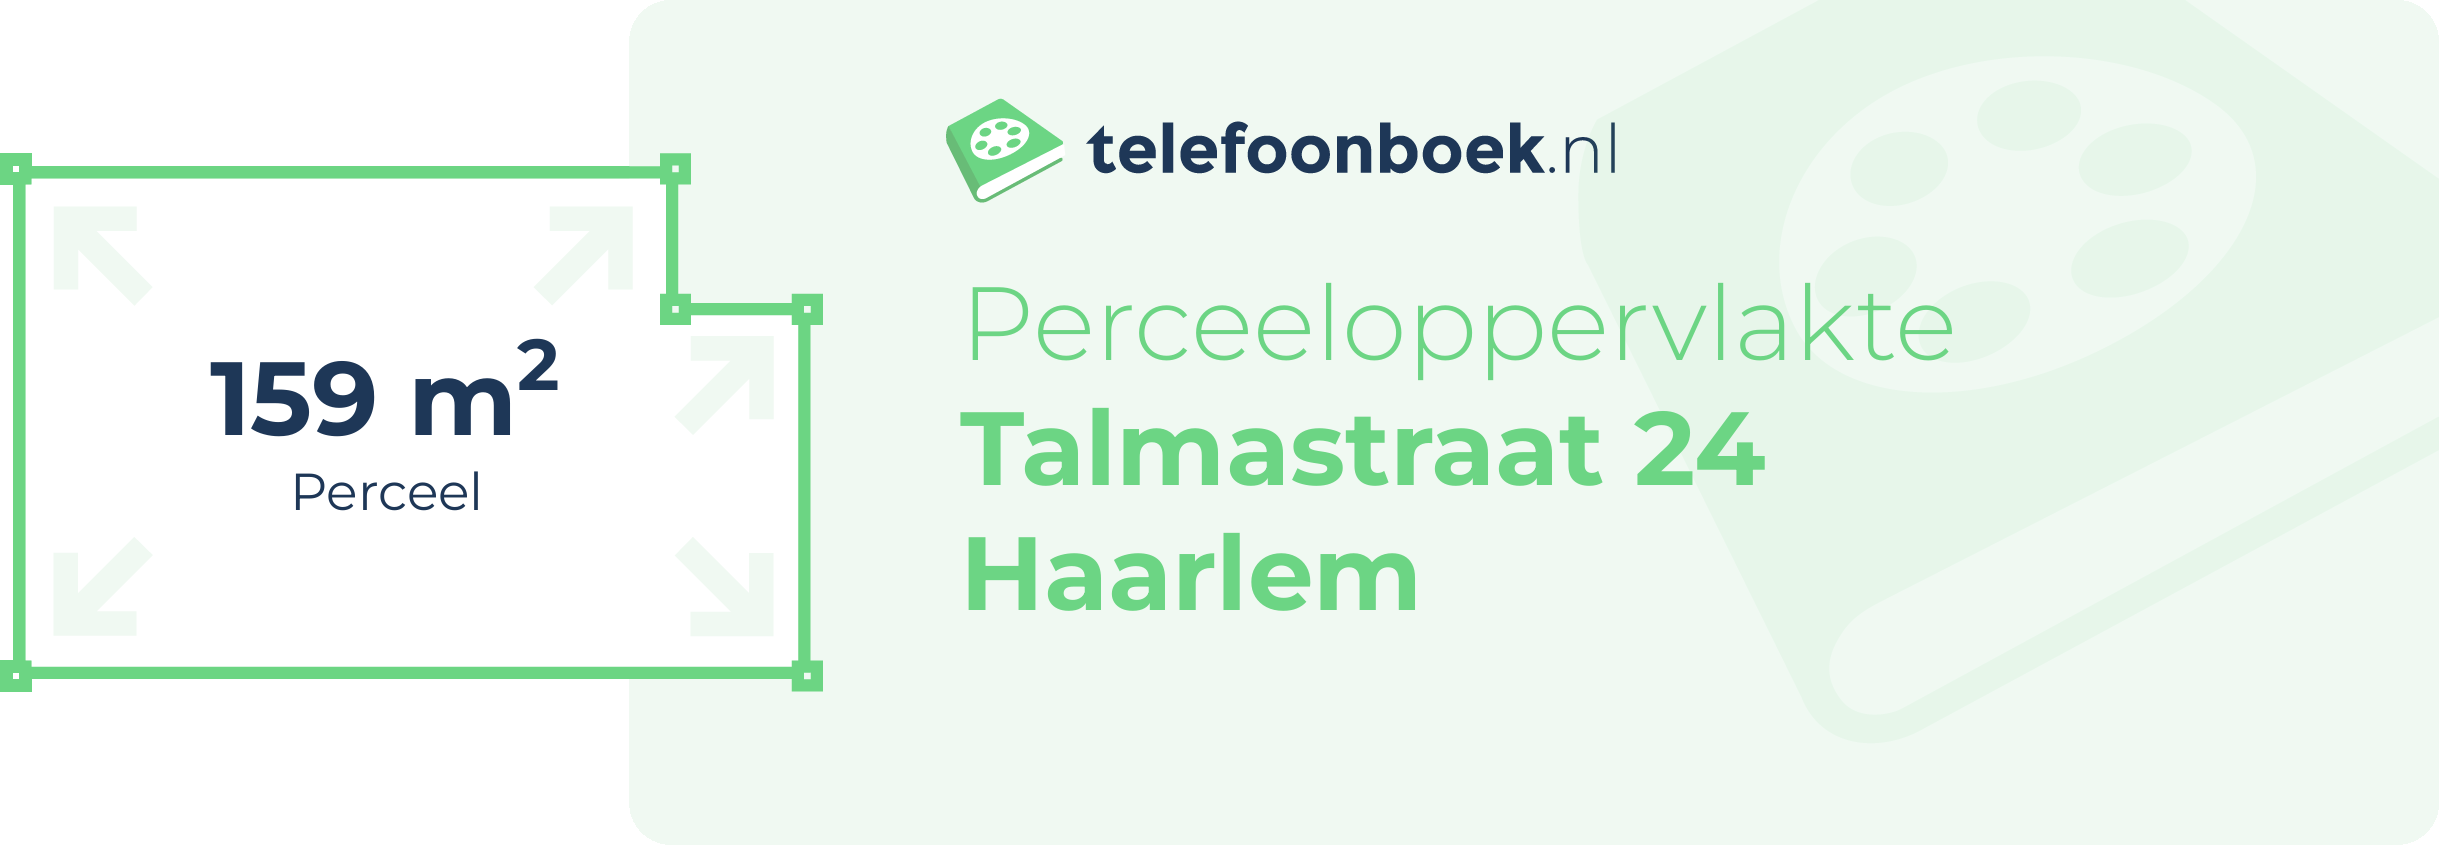 Perceeloppervlakte Talmastraat 24 Haarlem